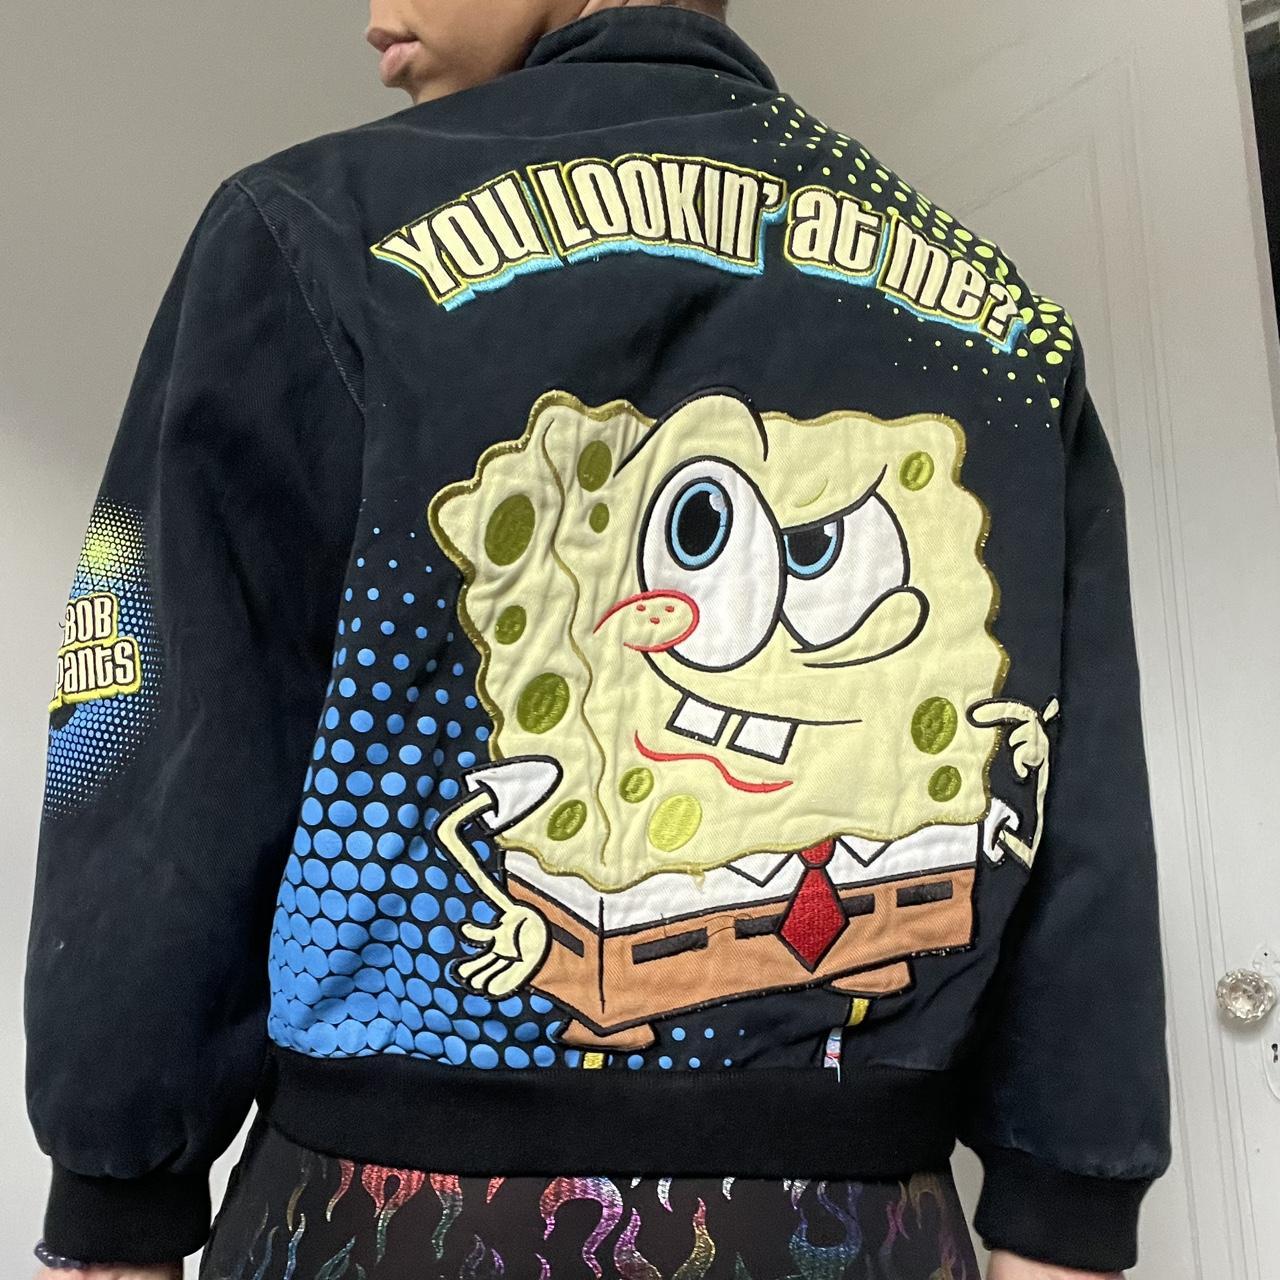 SpongeBob SquarePants Bomber Jacket, XS/S, When I